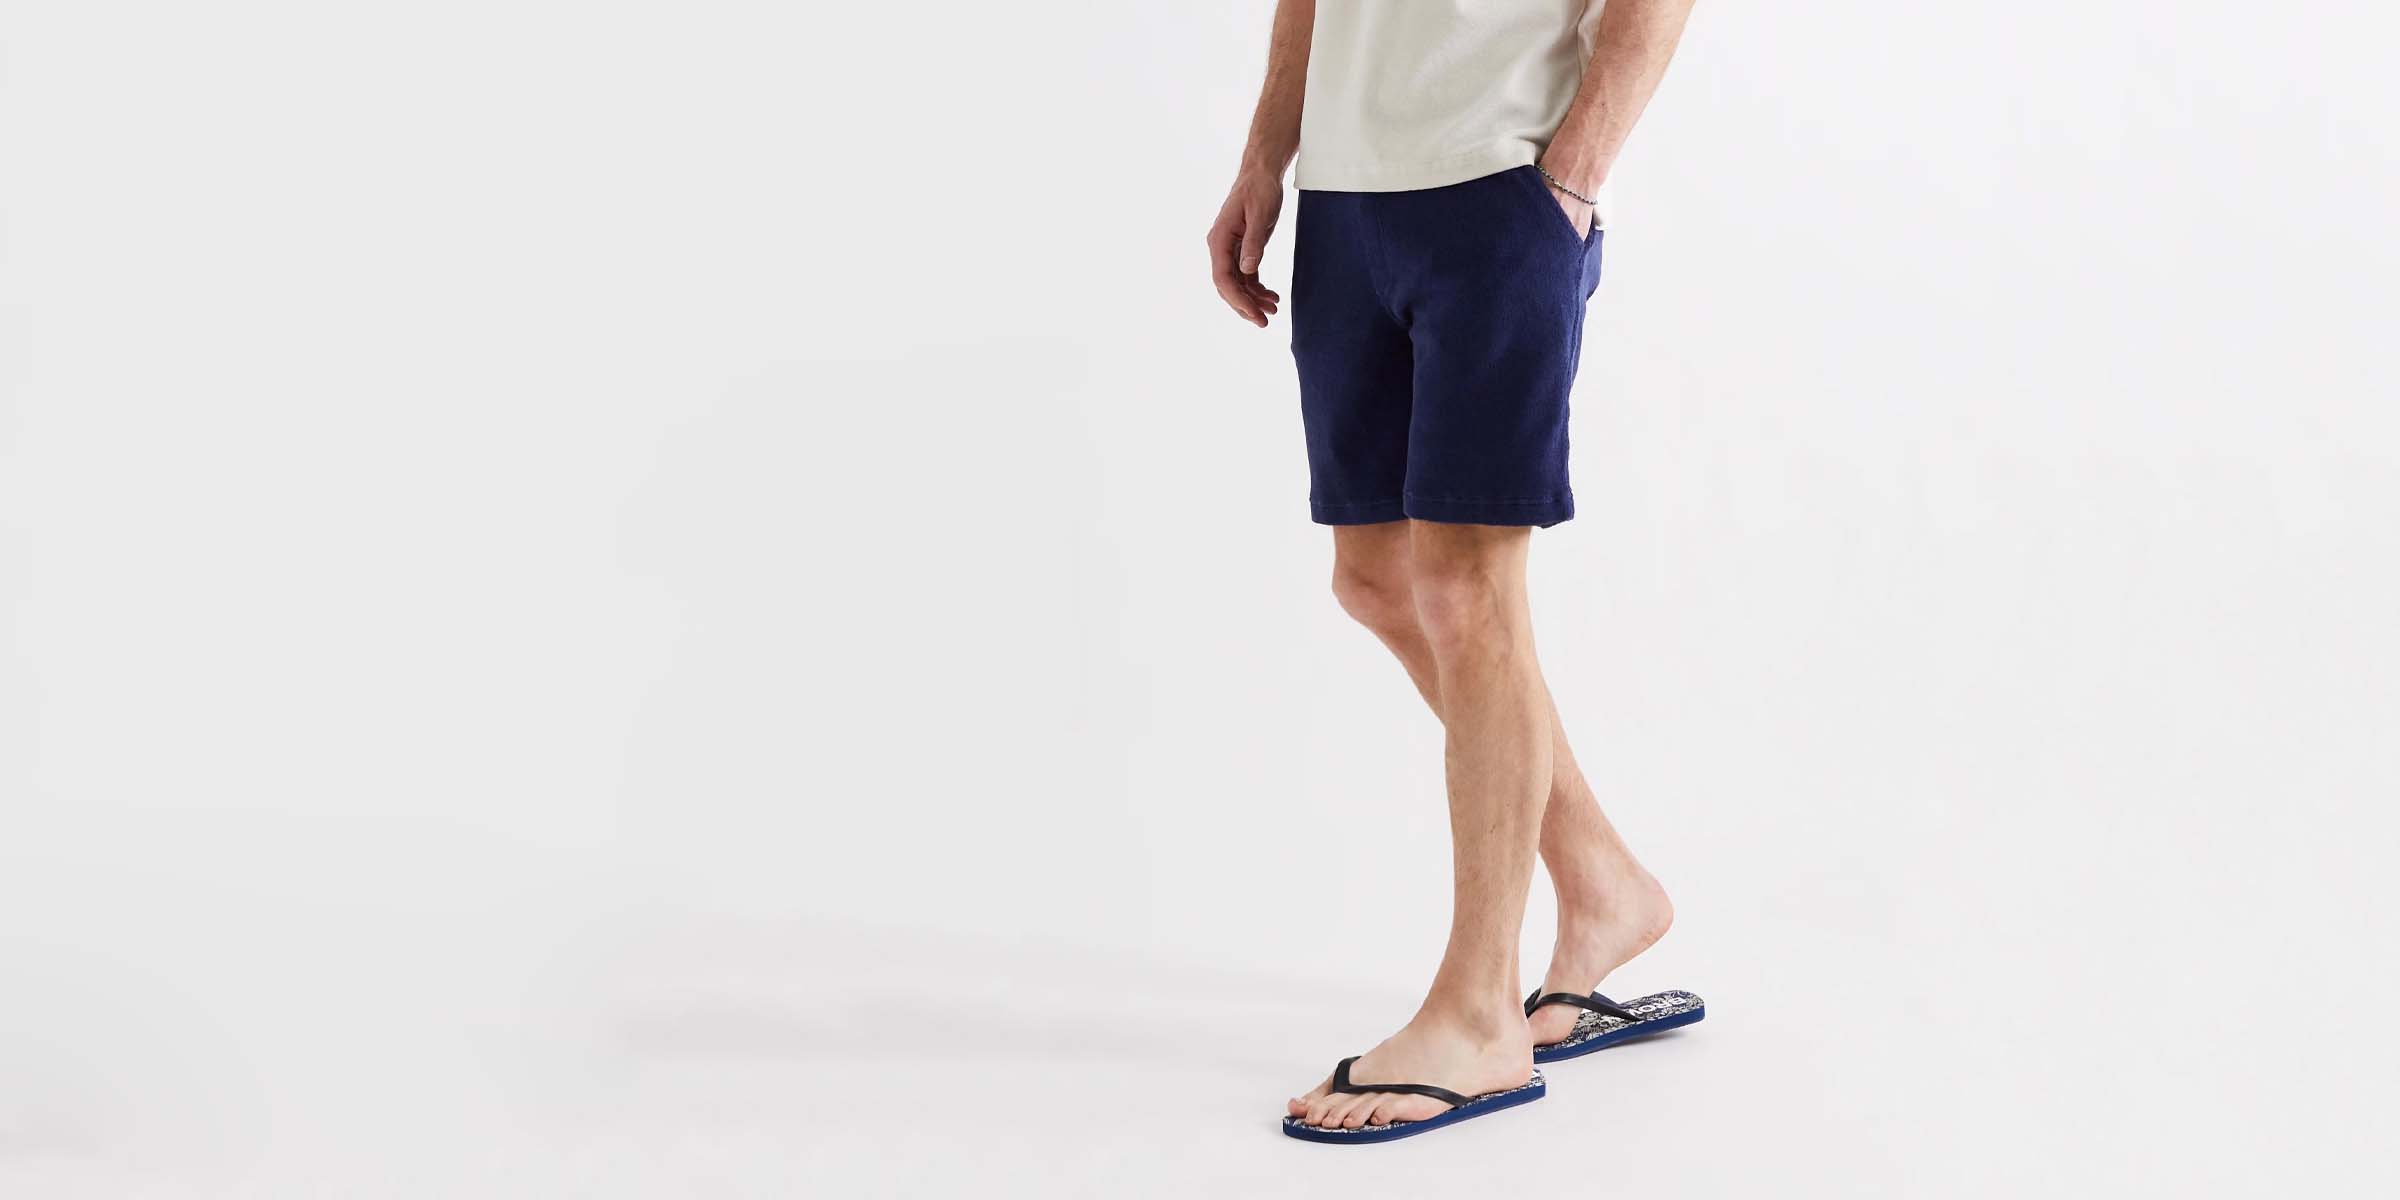 Fashion Flip Flops For Men | tyello.com